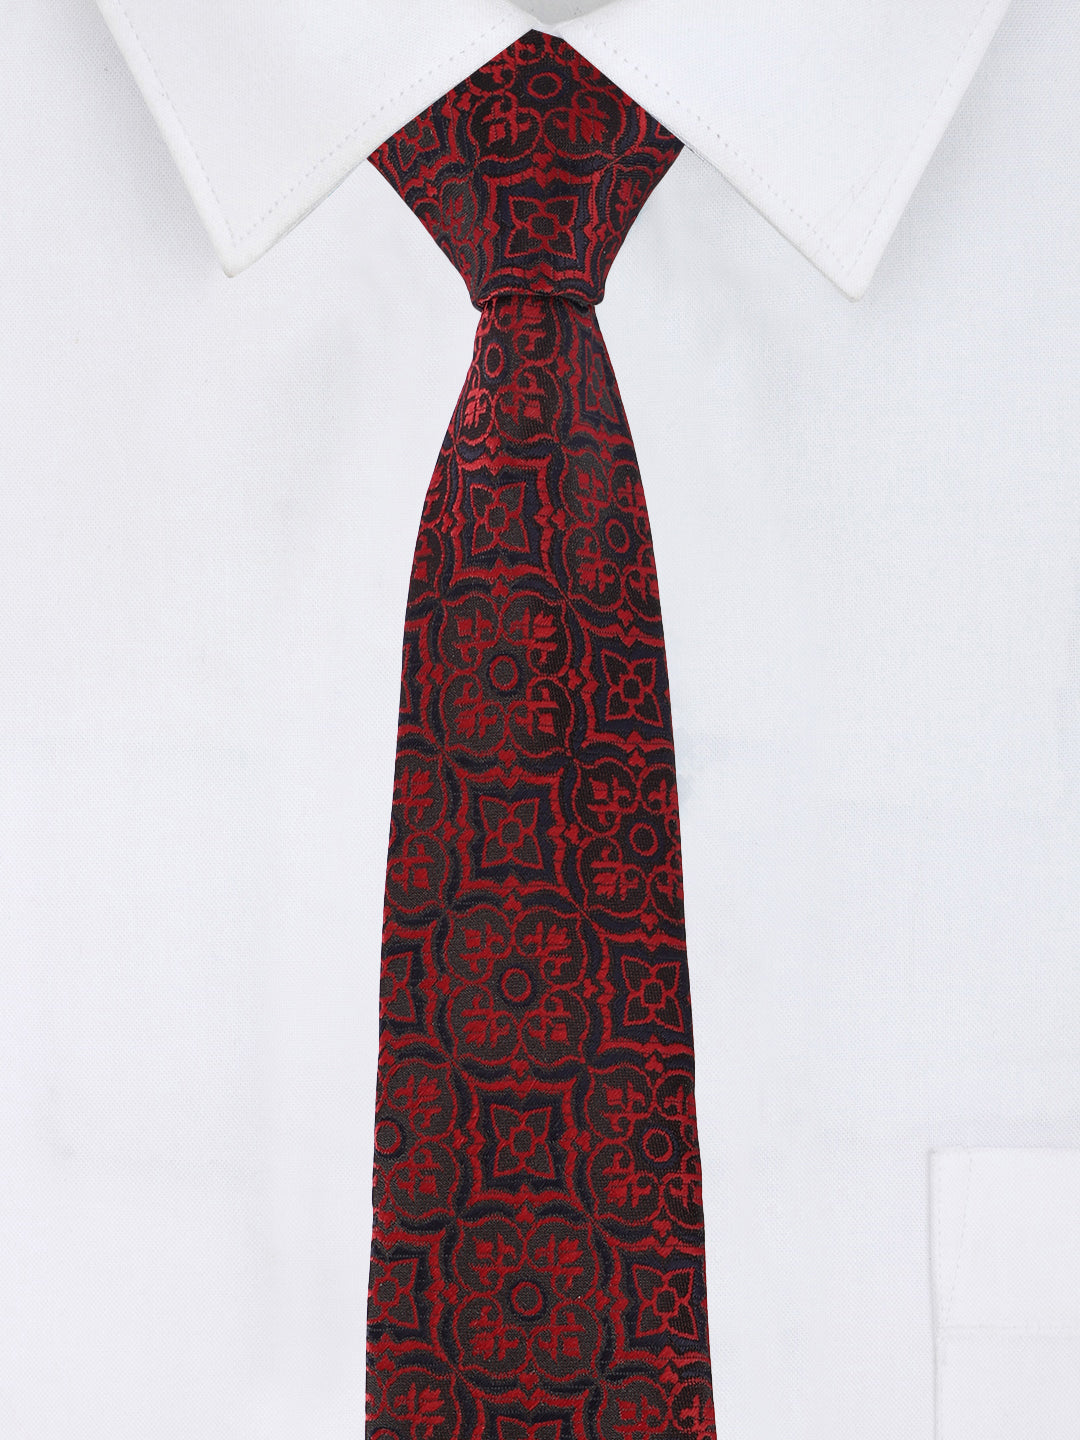 Alvaro Castagnino Microfiber RED AND BLACK Colored Necktie for Men